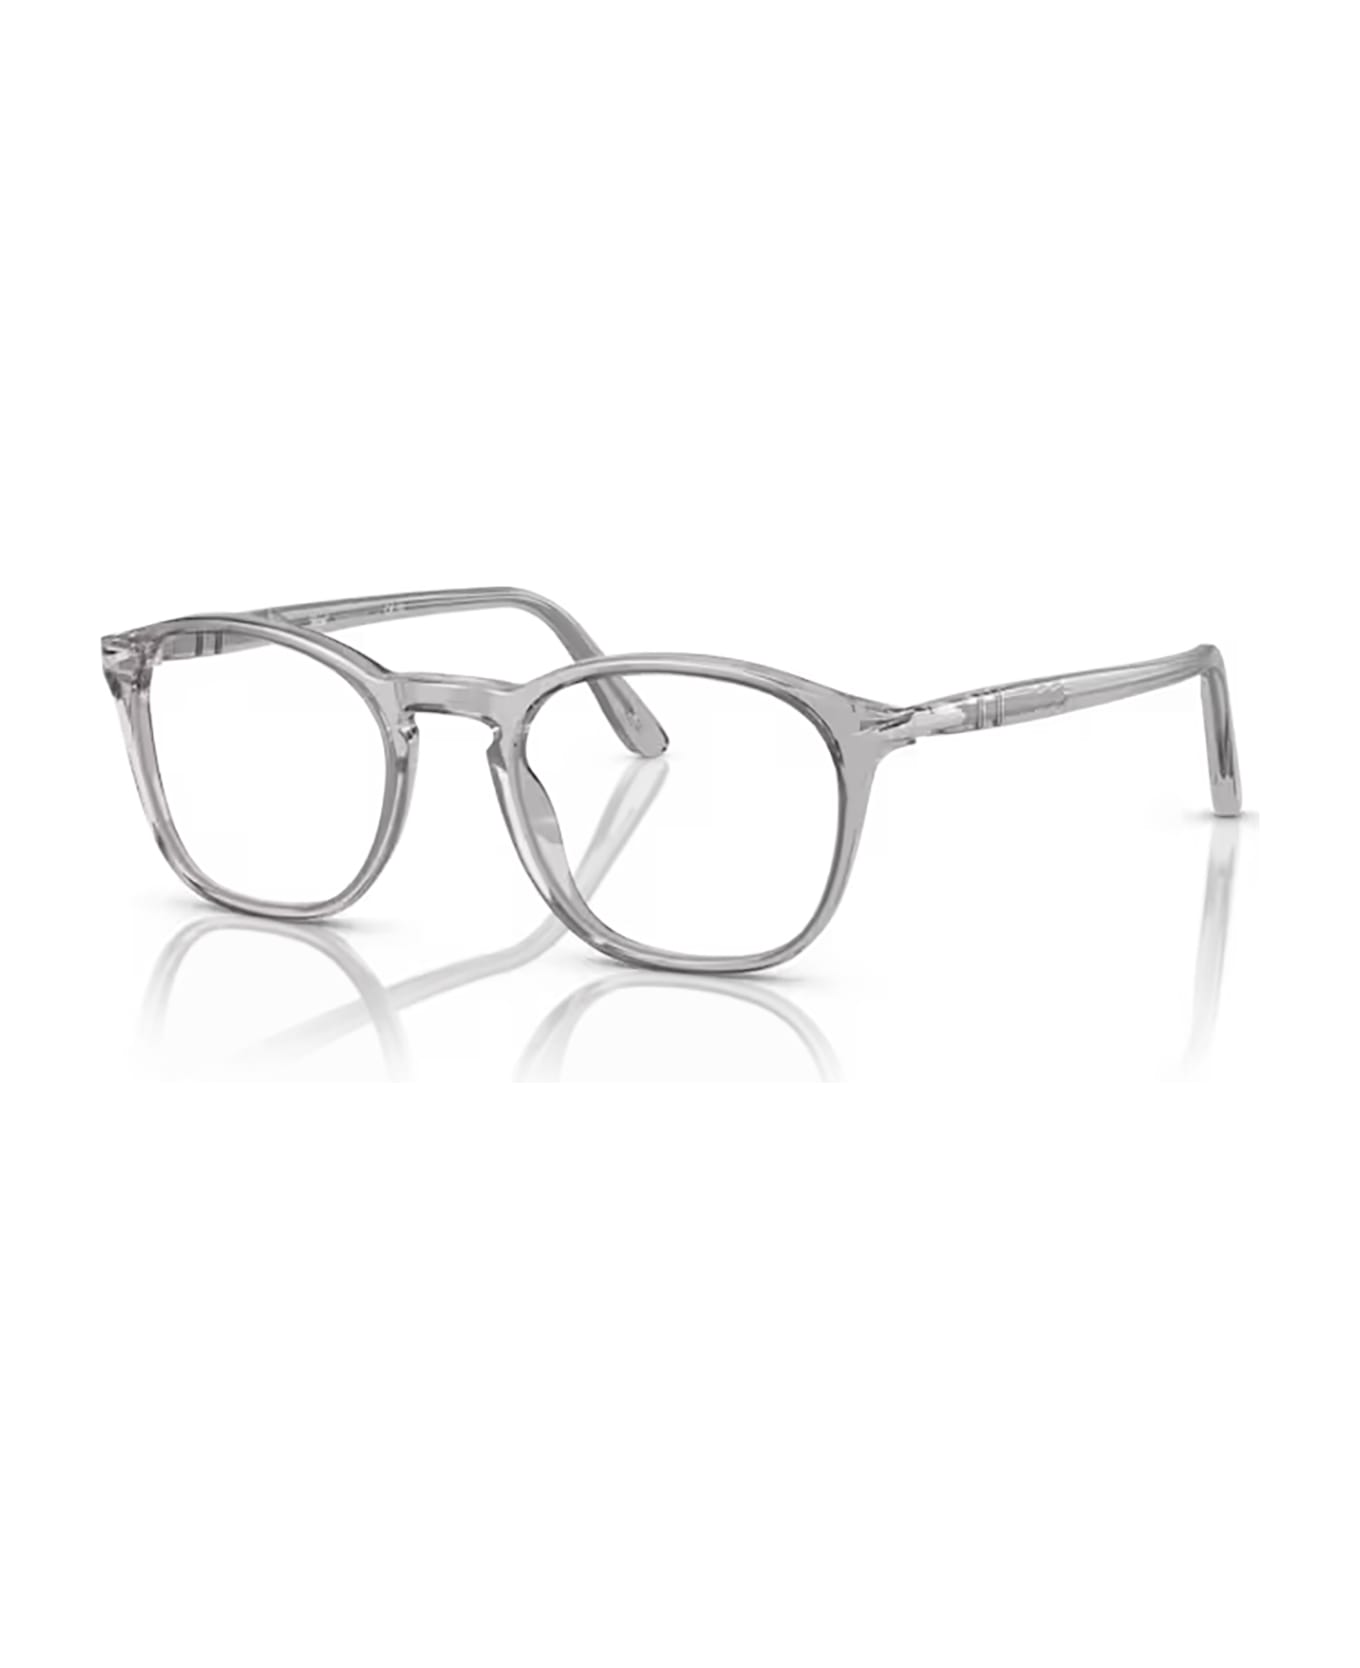 Persol Po3007v Transparent Grey Glasses - Transparent Grey アイウェア